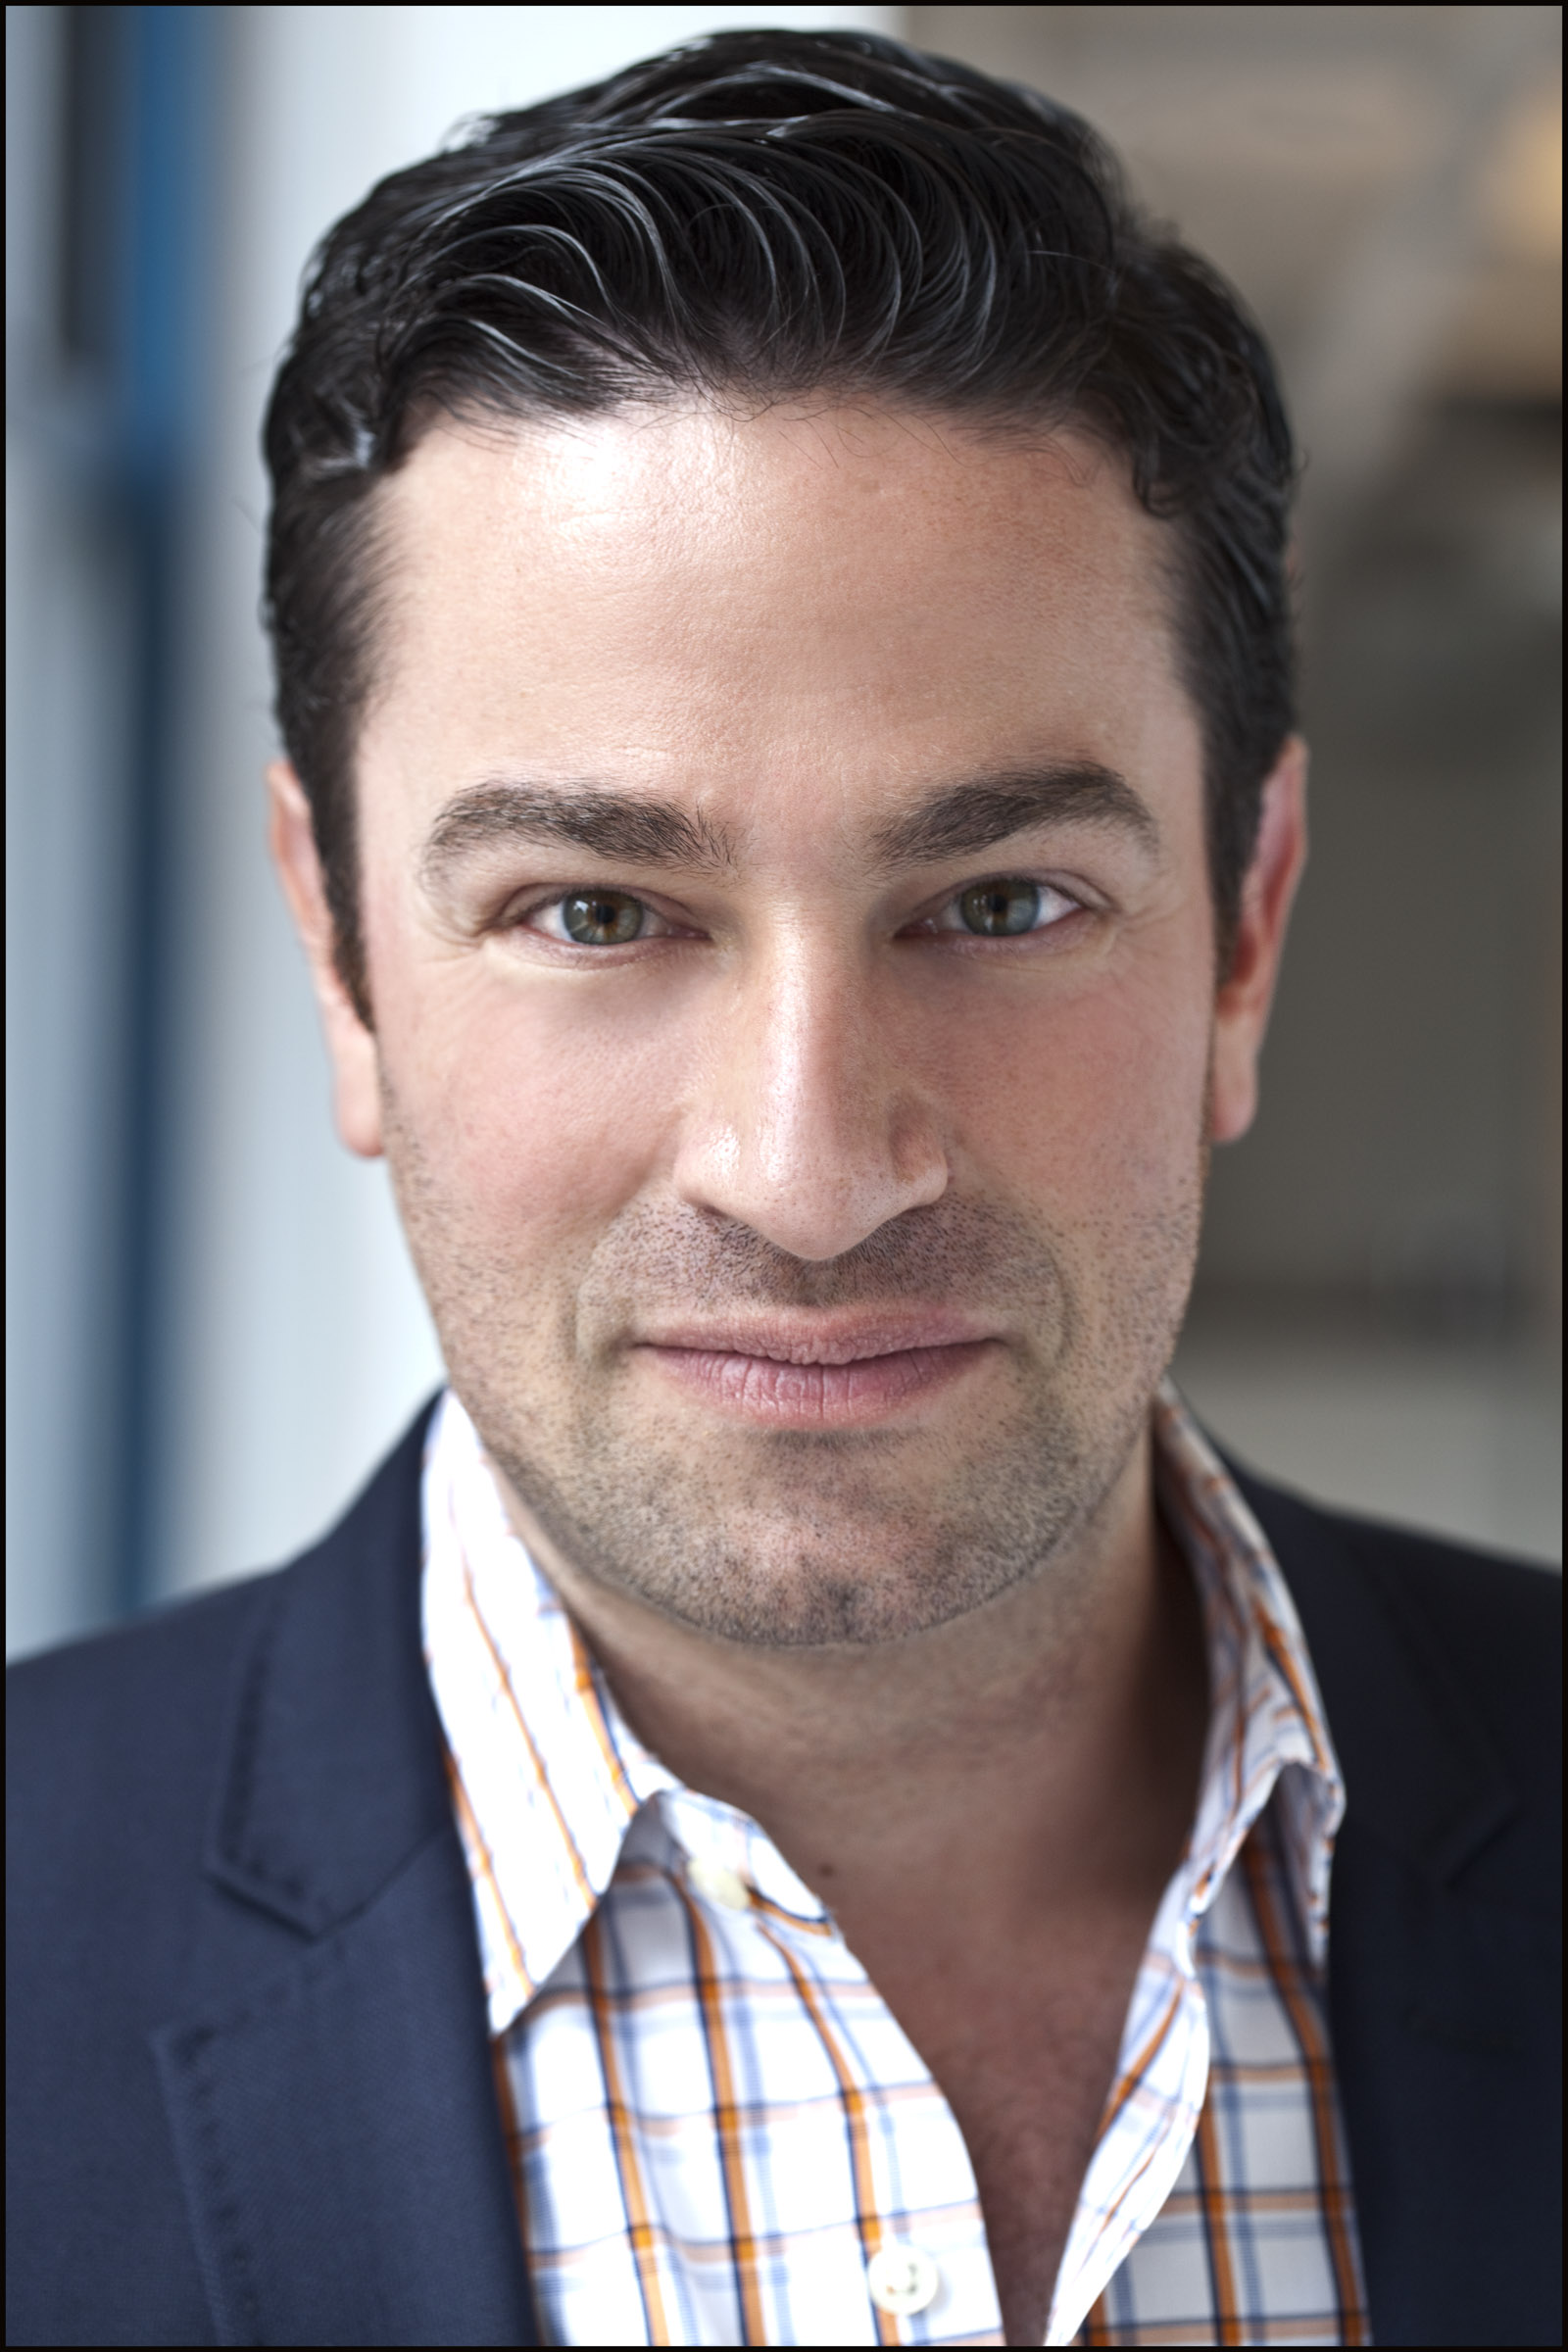 Mr. Silberman, Executive Headshot NYC, by Tess Steinkolk, CEO Portrait Photographer